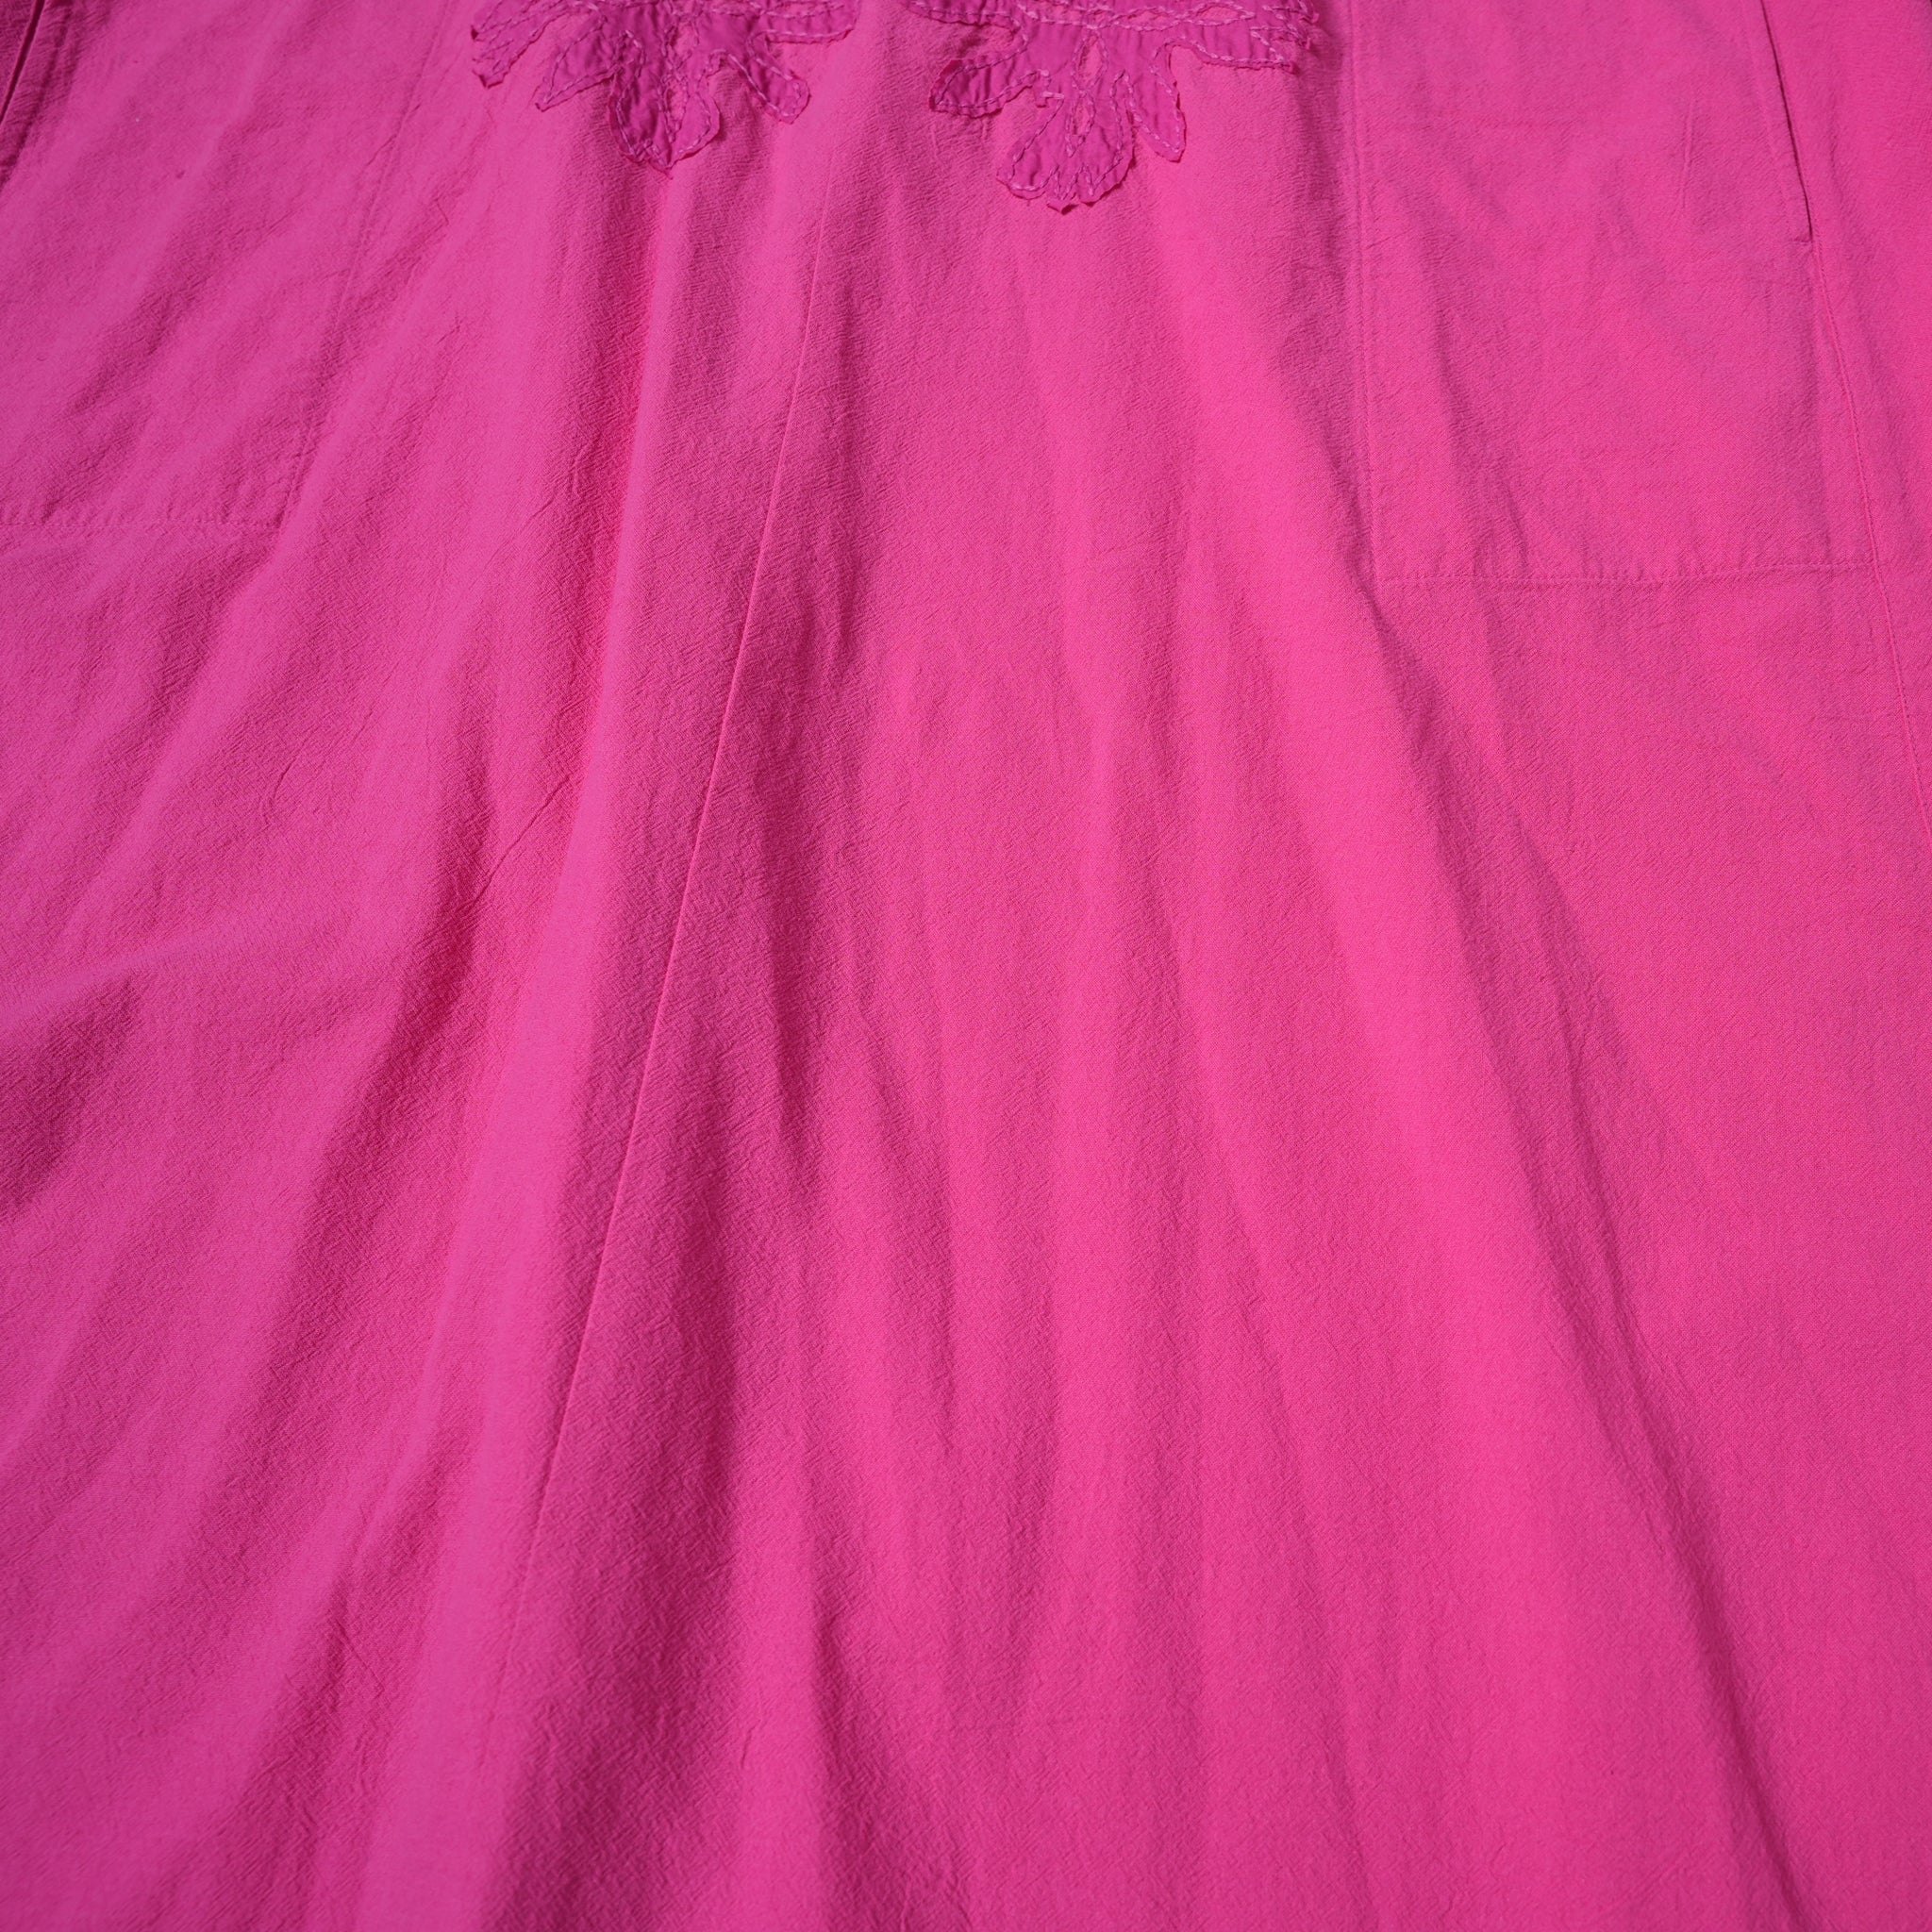 No:020432SA1a | Name:COTTON FLOWER PATCHWORK DRESS | Color:Pink 